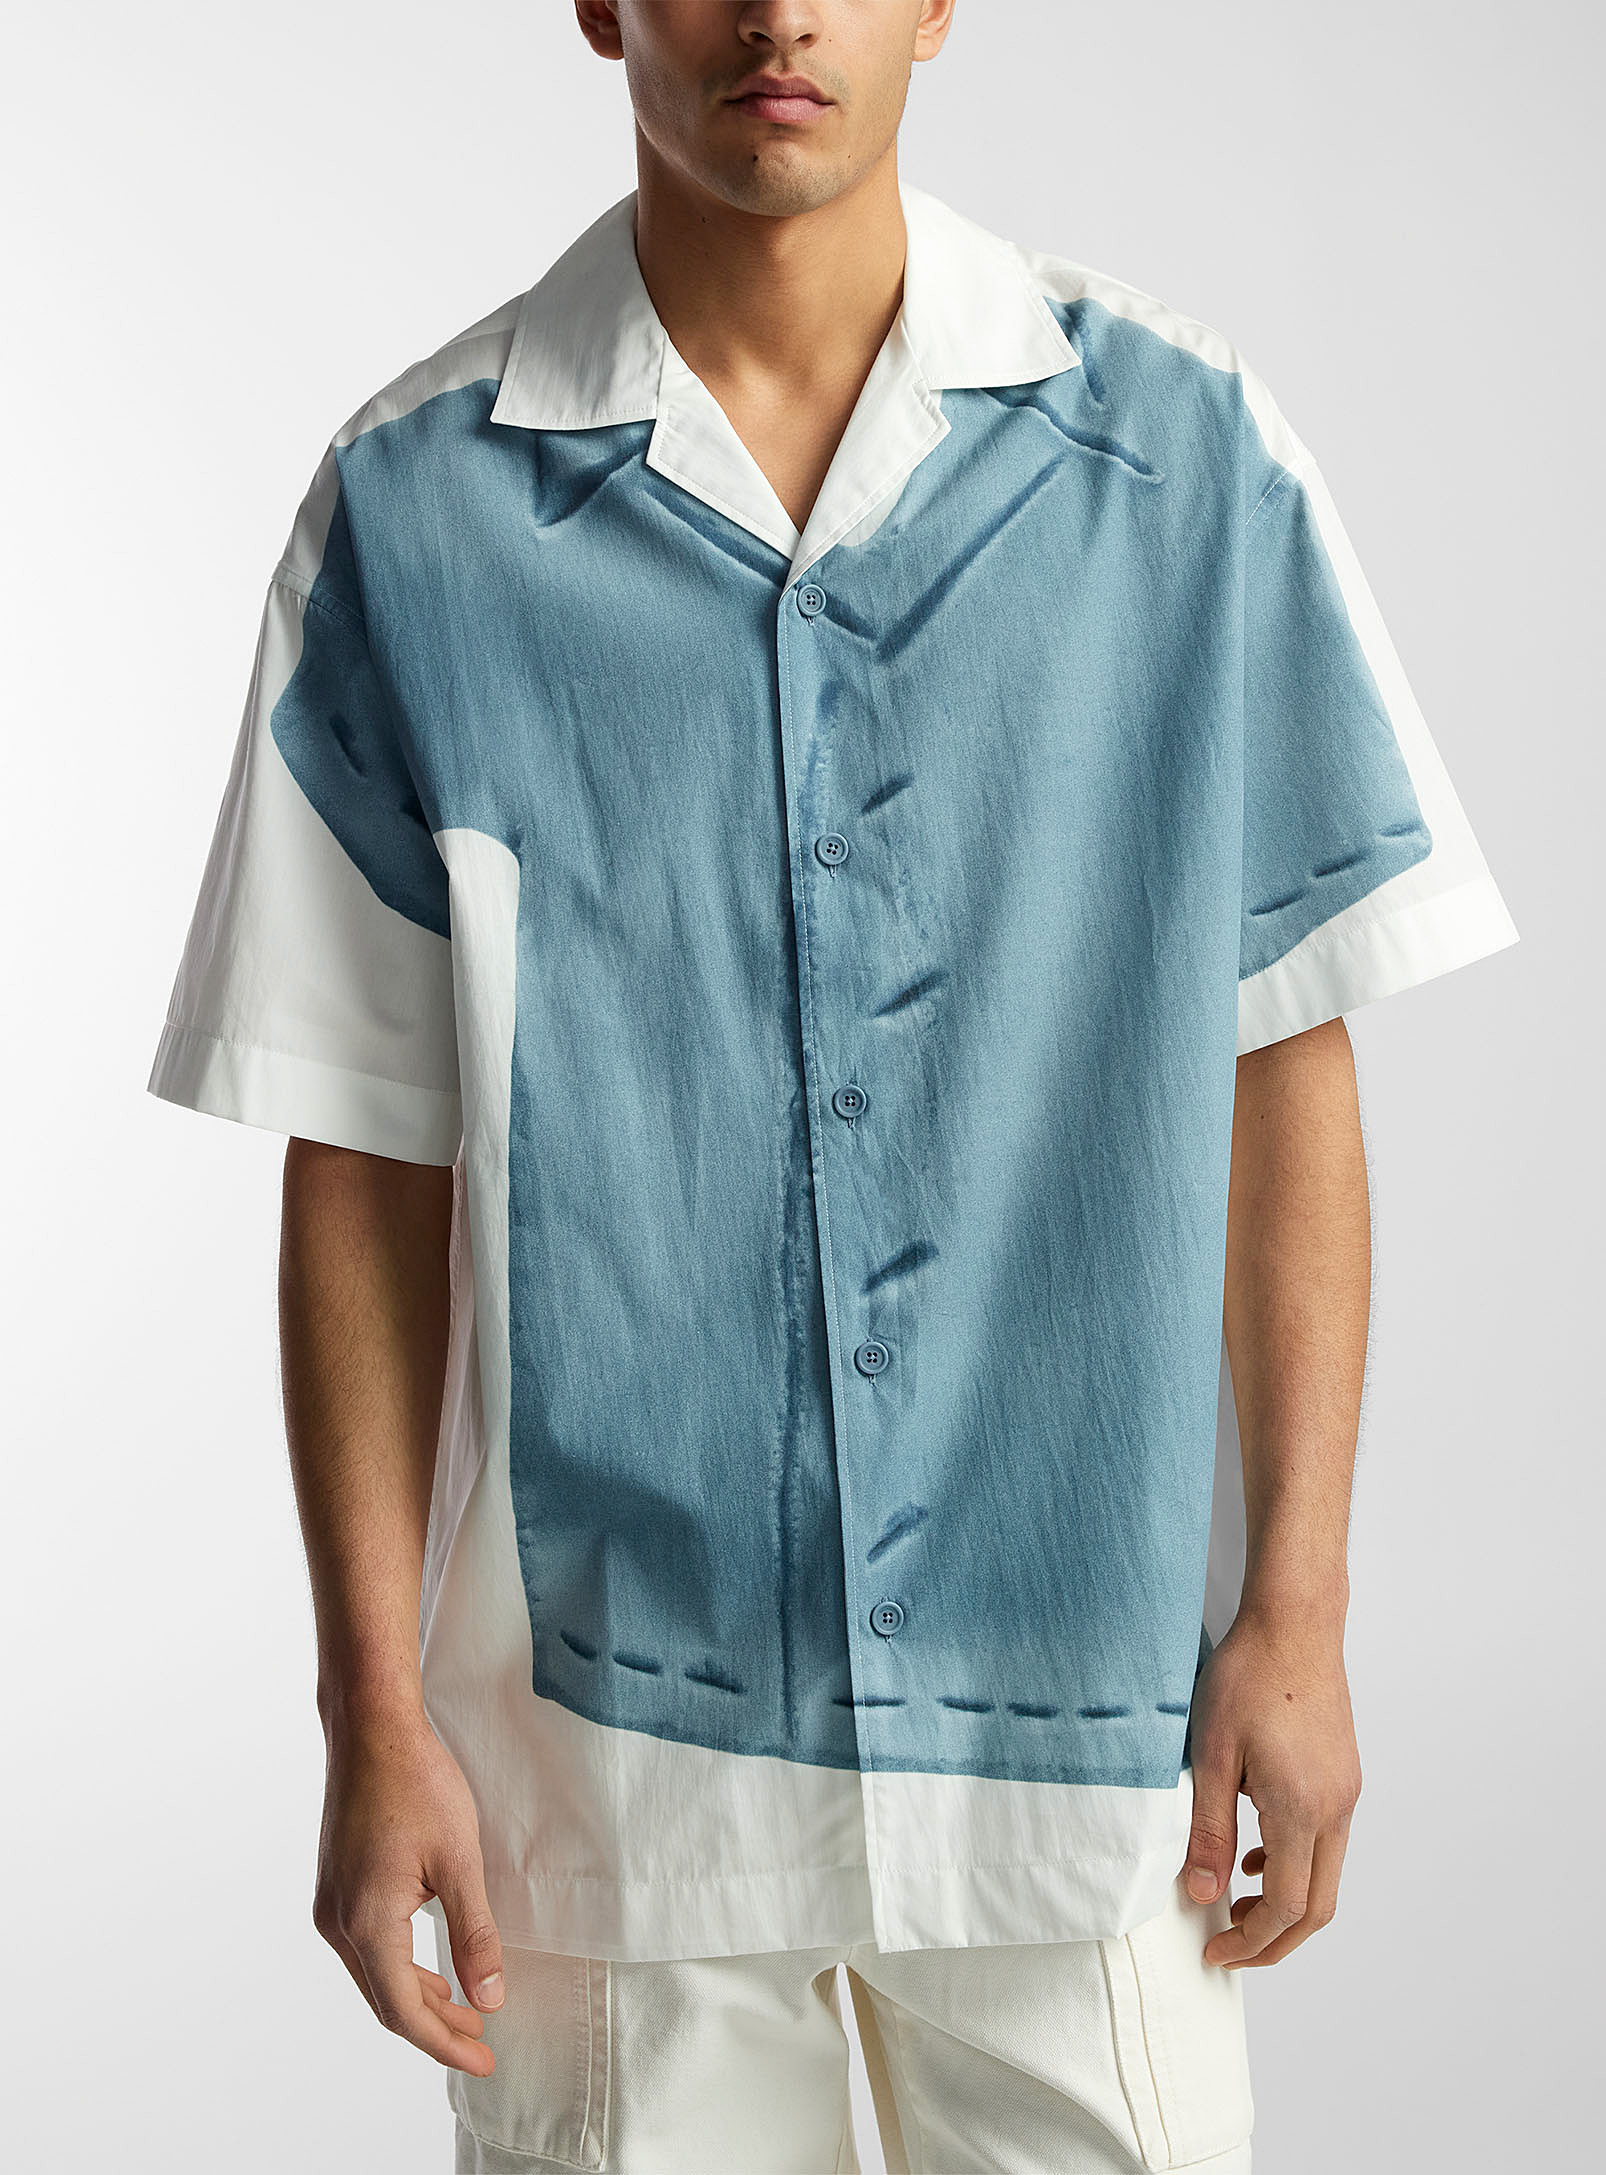 JW Anderson - Men's Trompe-l'oeil shirt